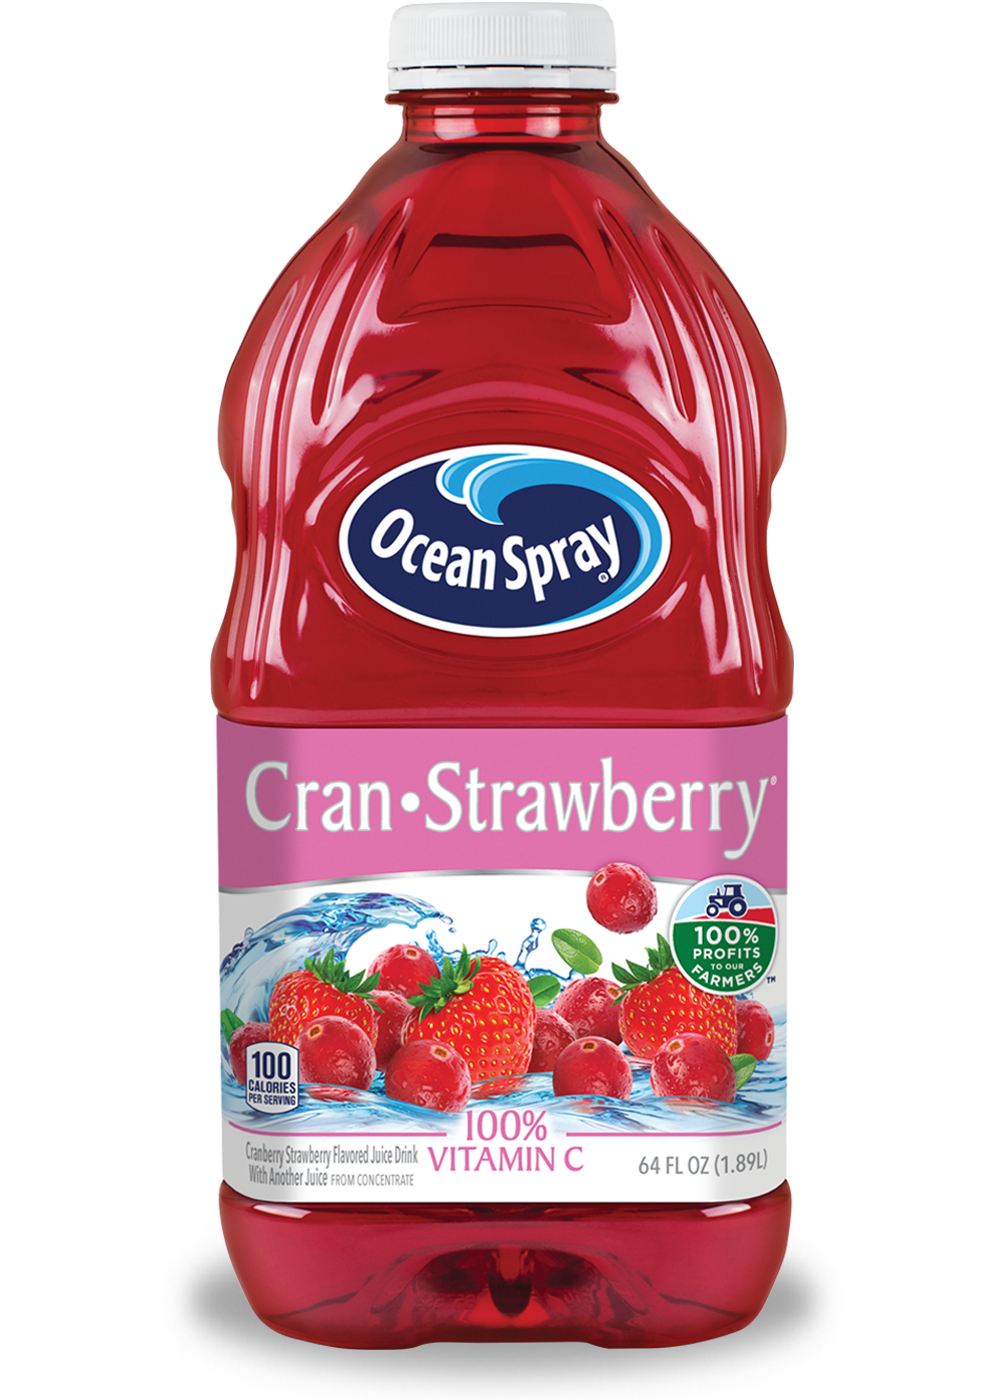 Cran•Strawberry® Cranberry Strawberry Juice Drink Ocean